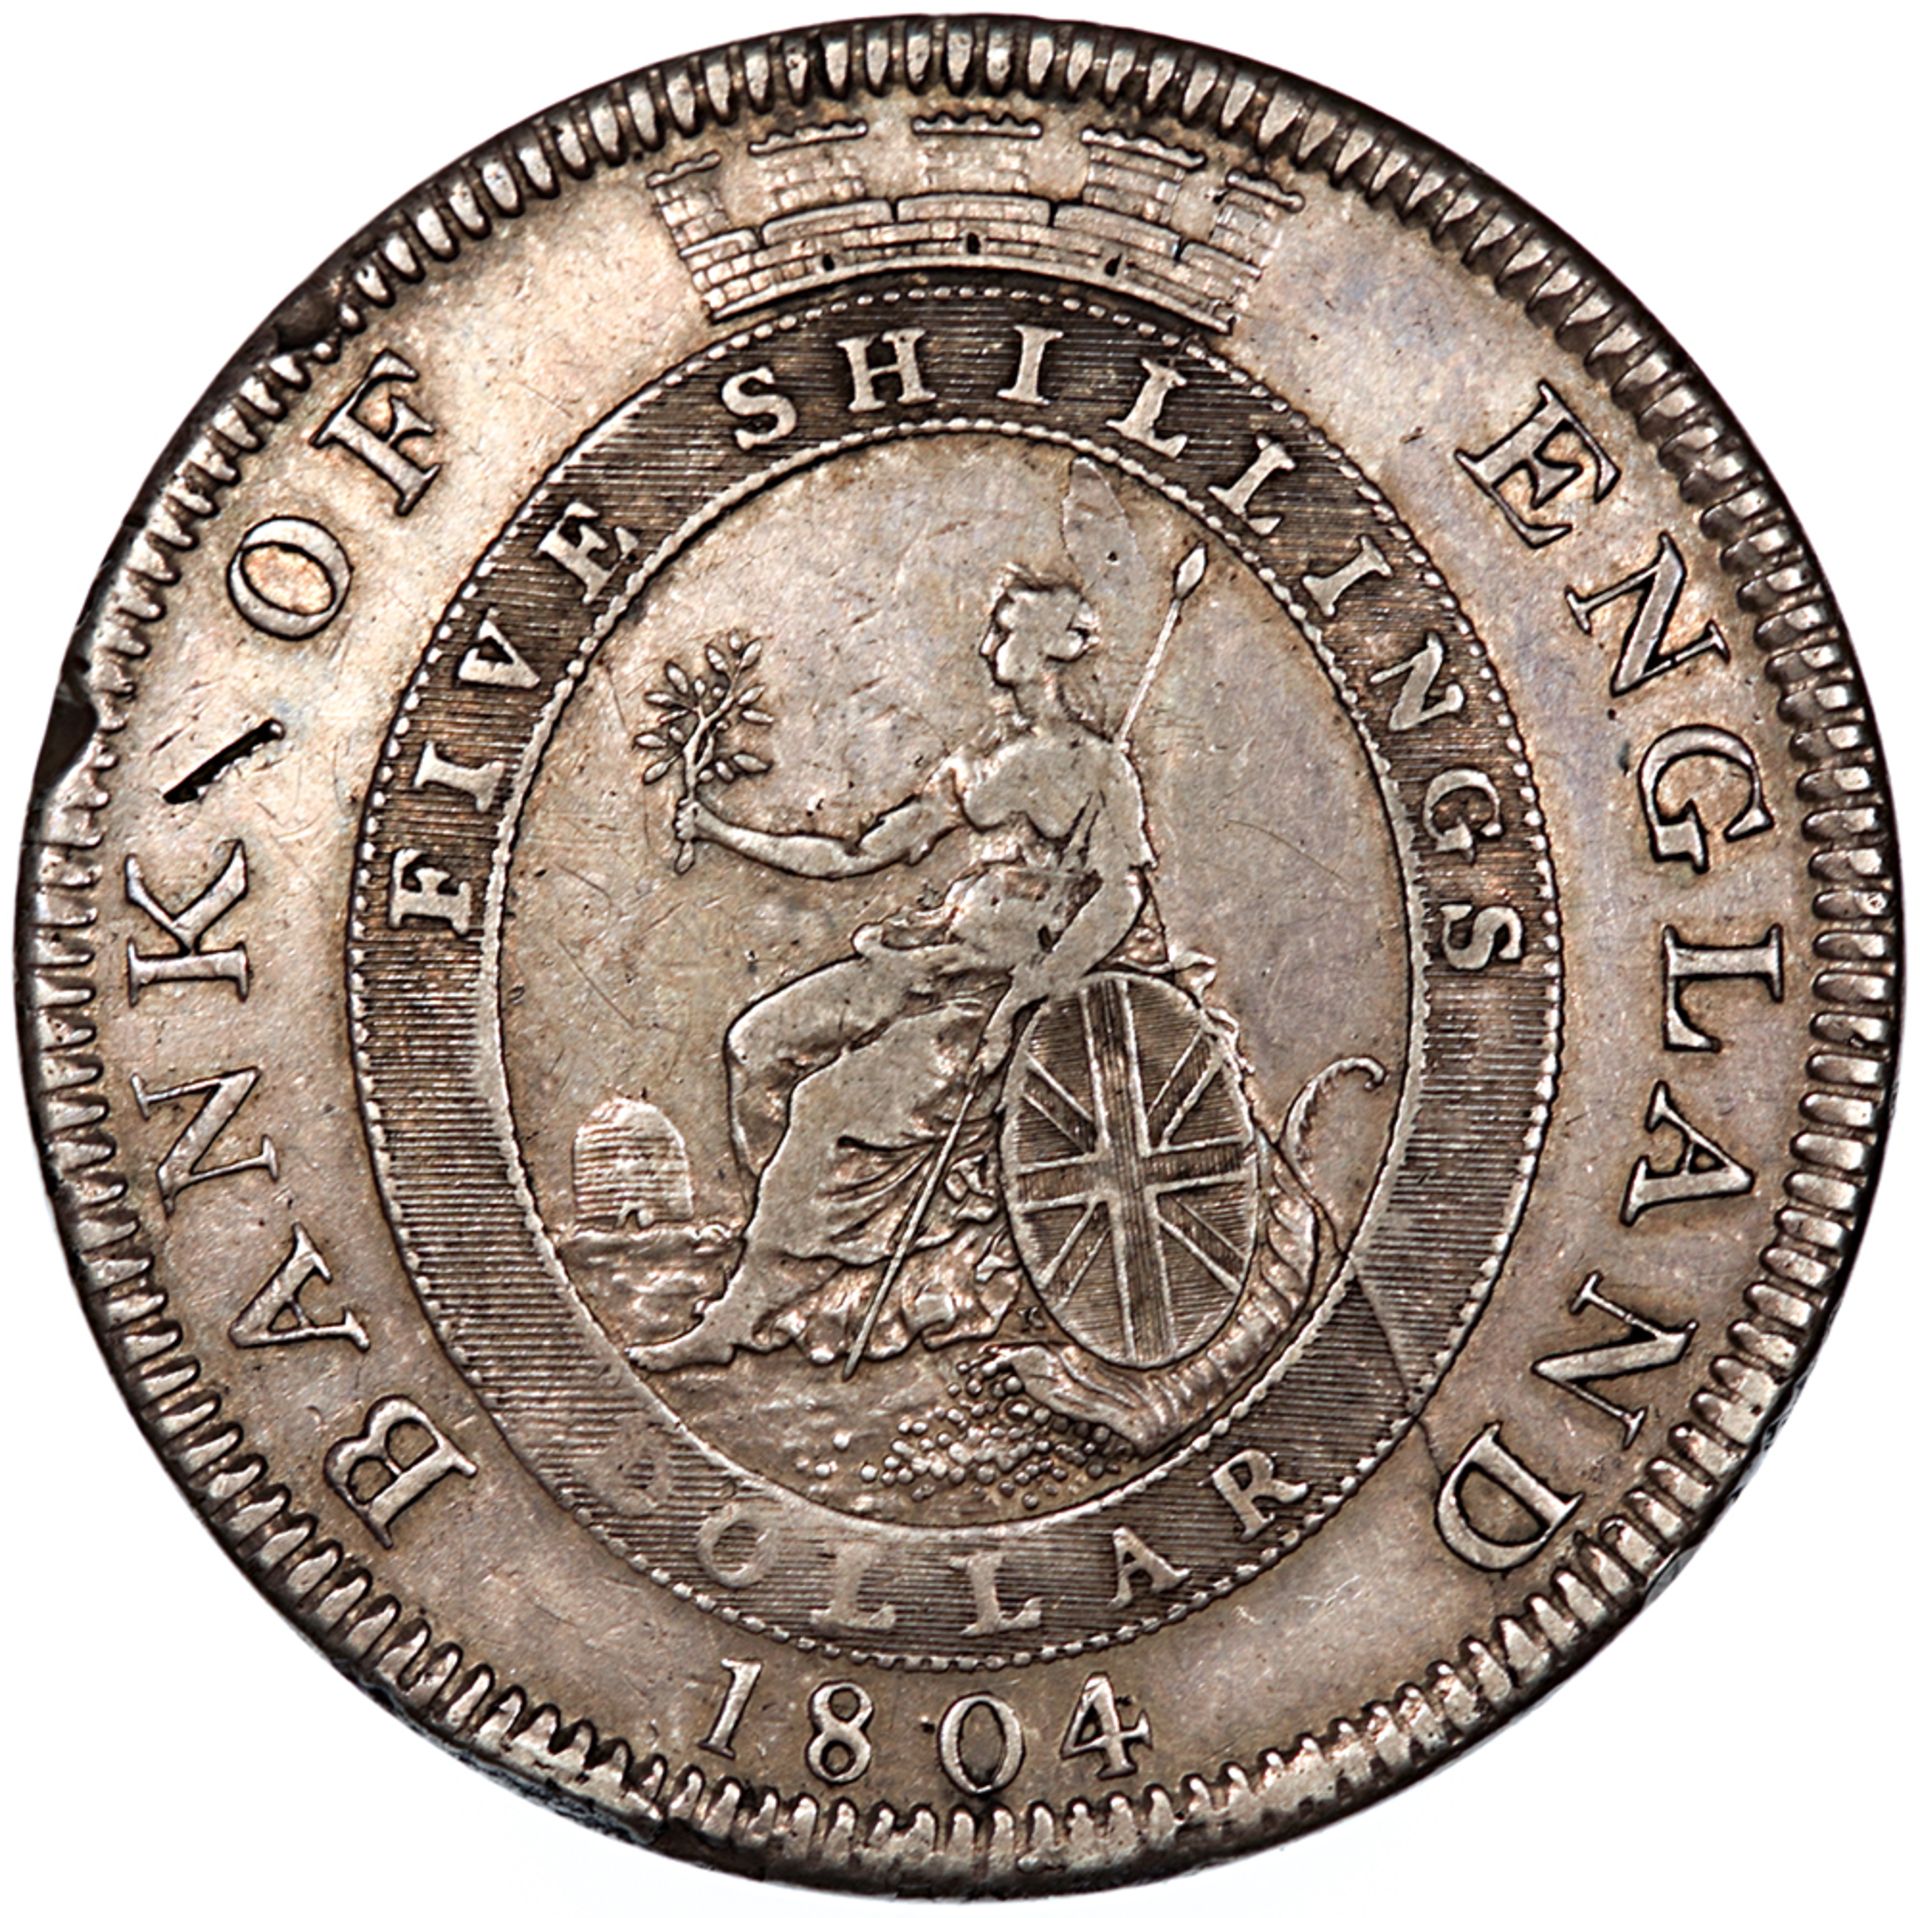 UK - George III Bank Of England 5 Shilling silver Dollar 1804 (saleroom location: S3 GC4) - Image 2 of 2